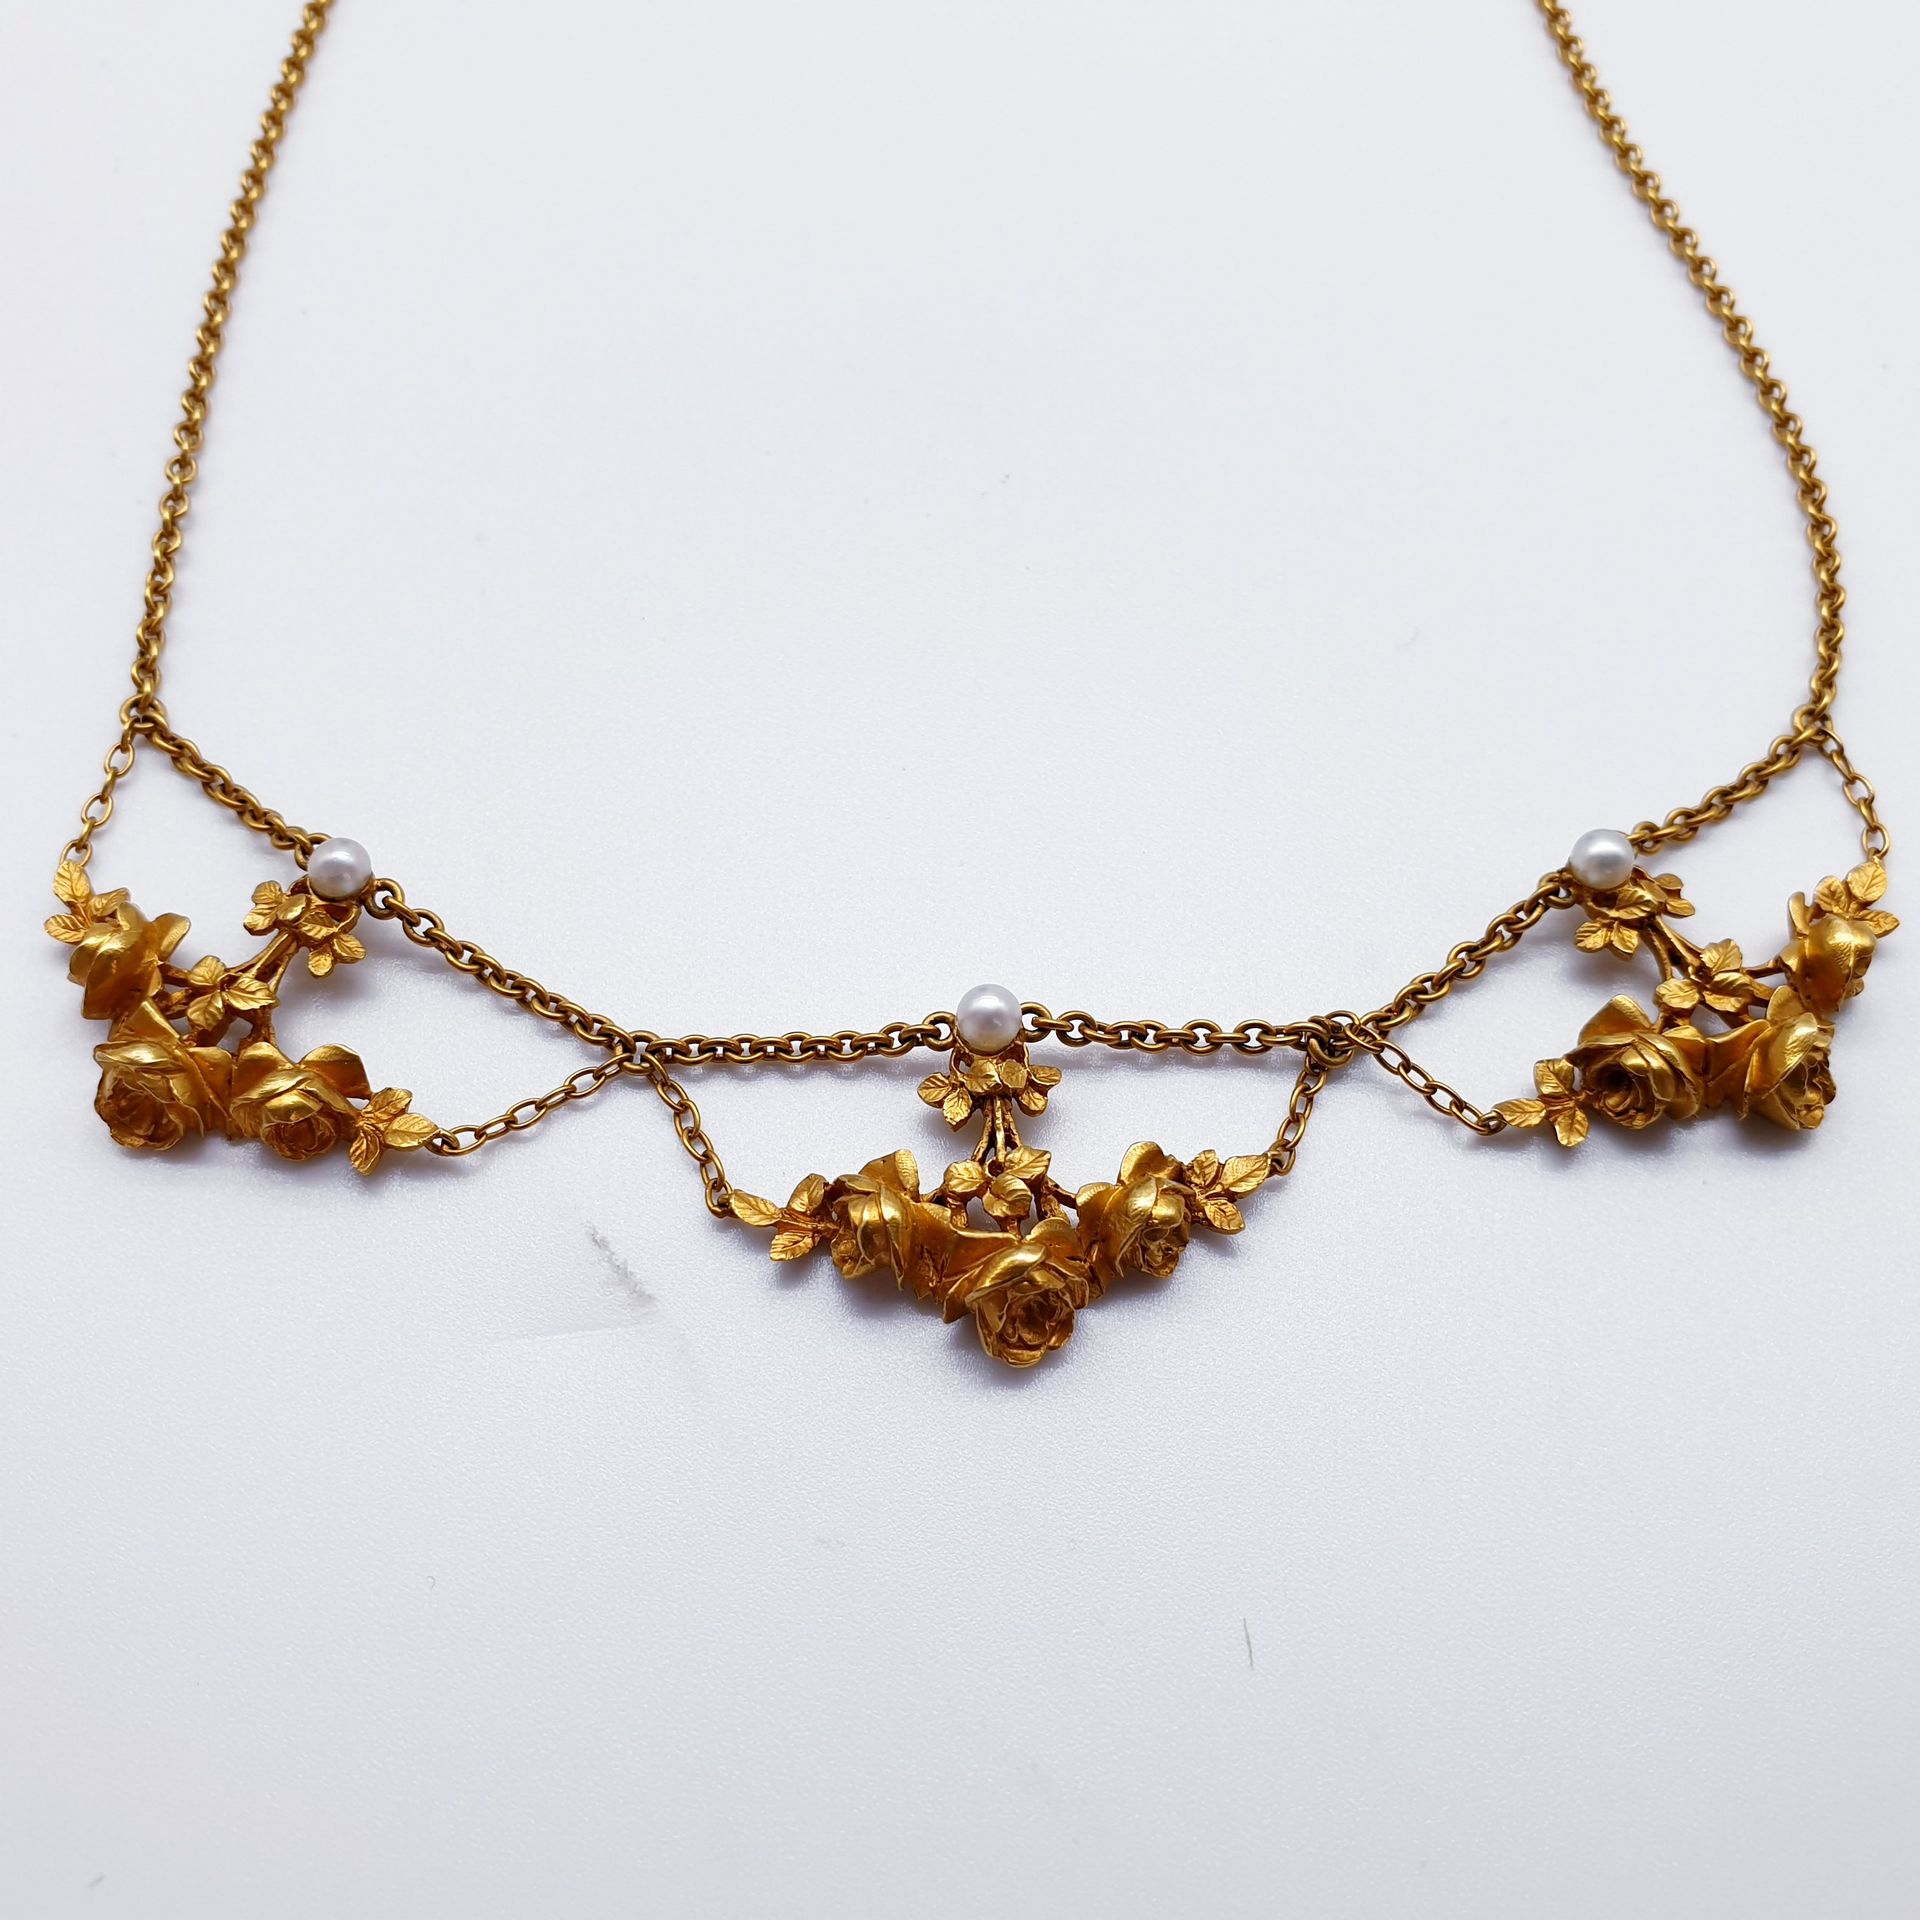 Null 法国工作

黄金垂饰项链，上面有三个花卉图案，上面有珍珠。

毛重 : 18,68 g